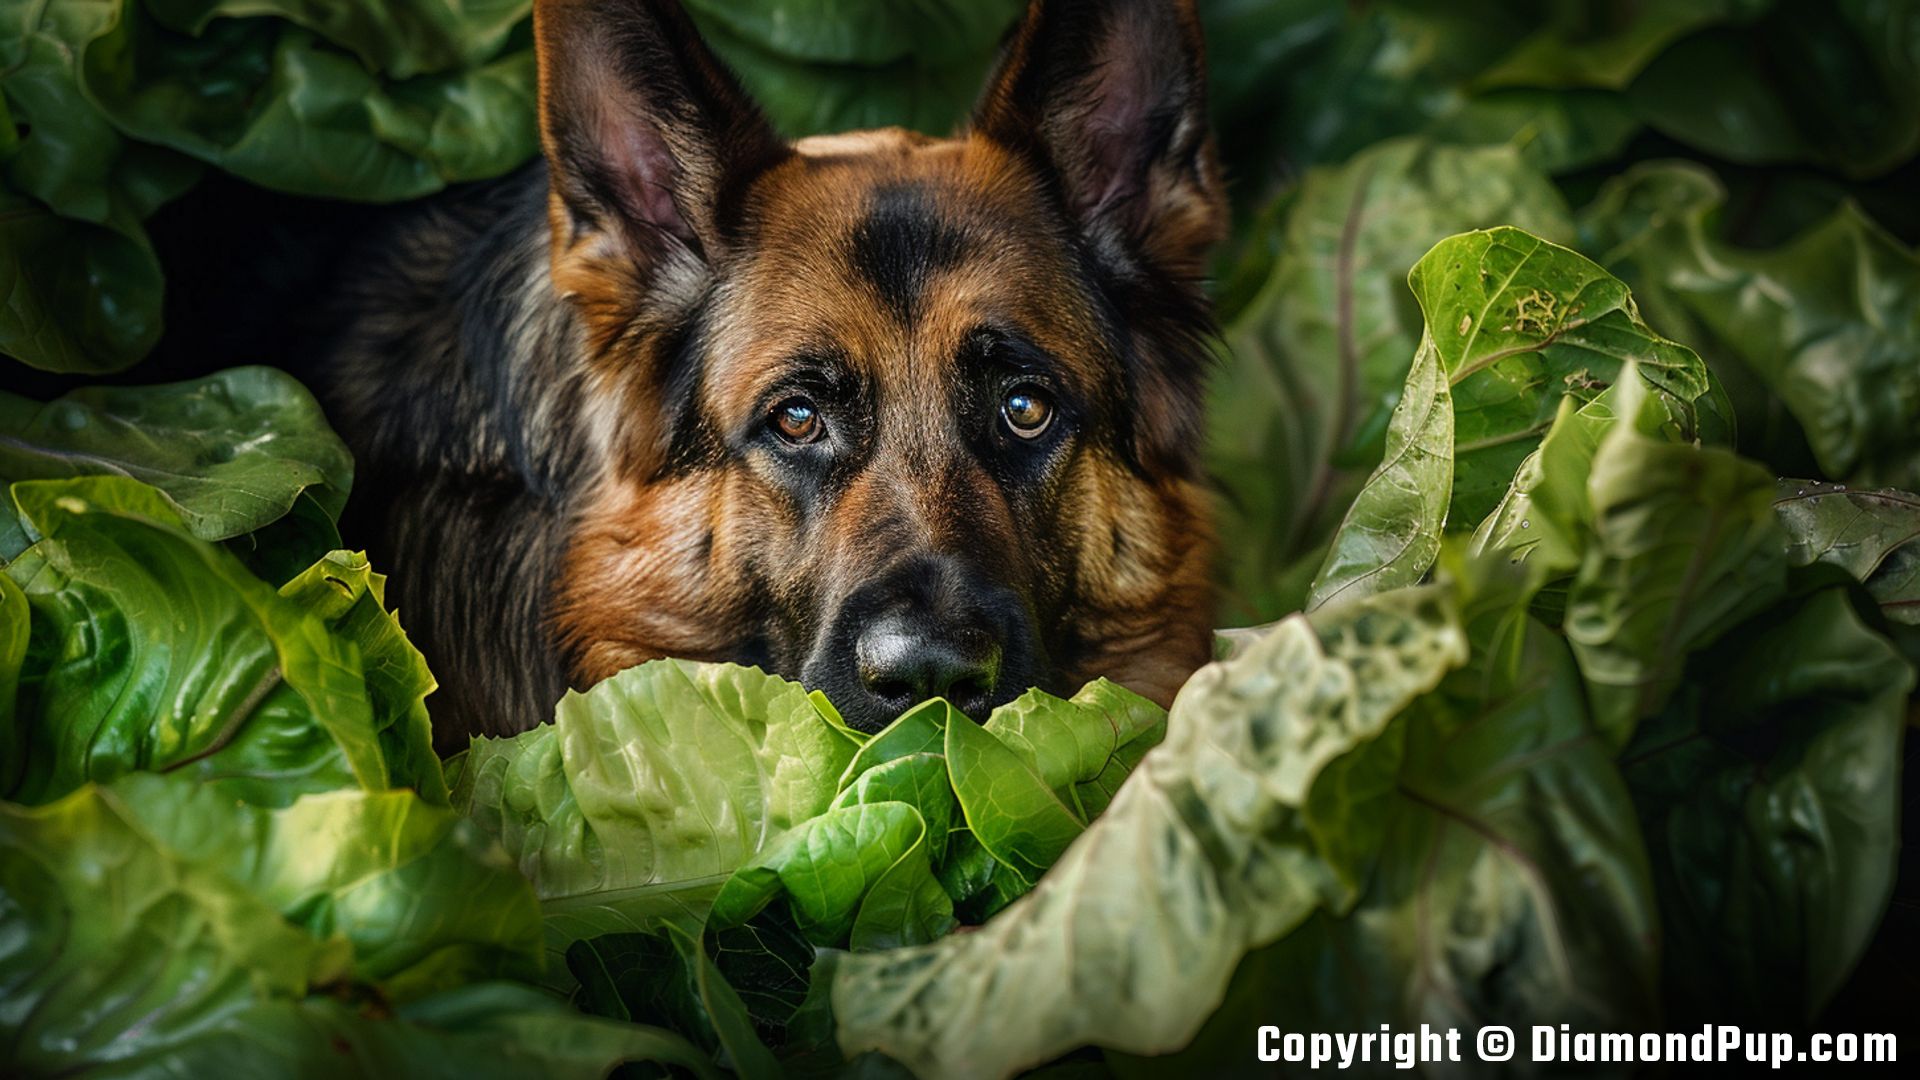 Image of an Adorable German Shepherd Eating Lettuce